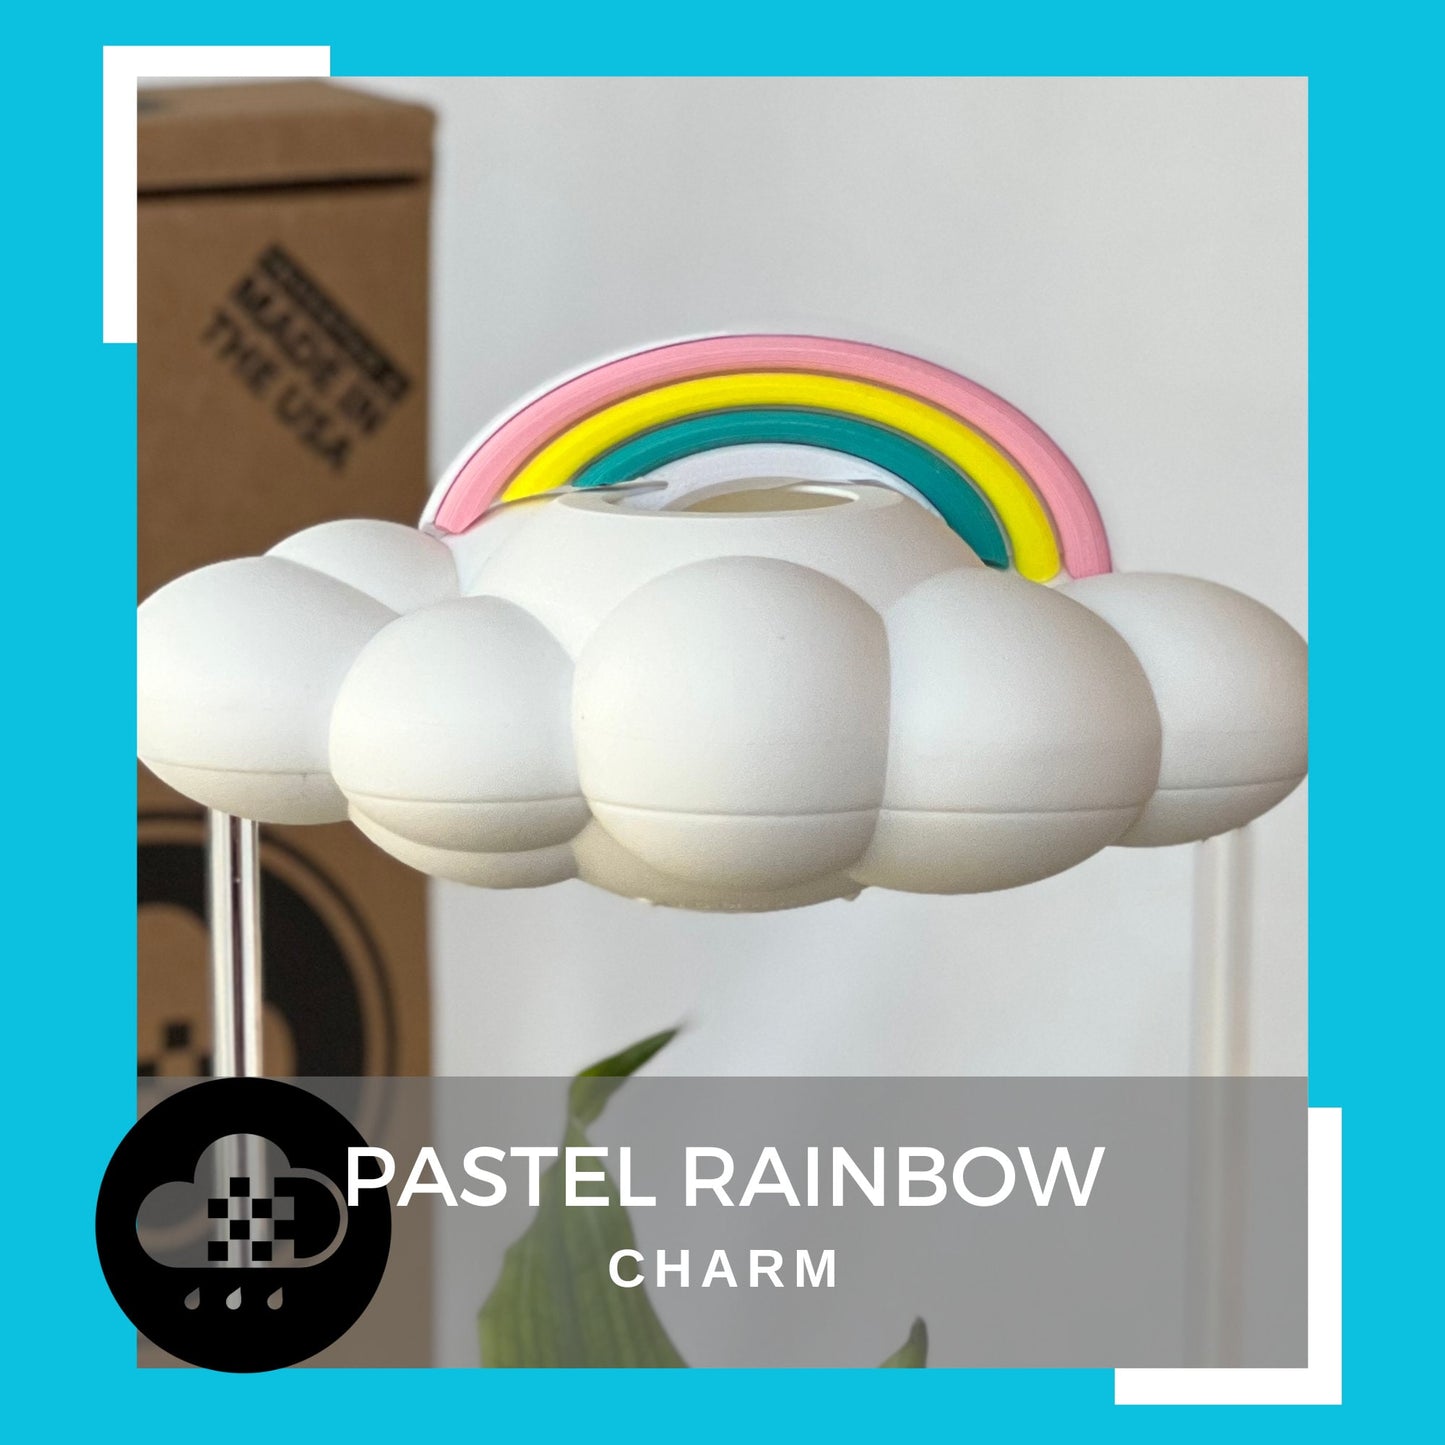 Pastel rainbow charm for dripping rain cloud